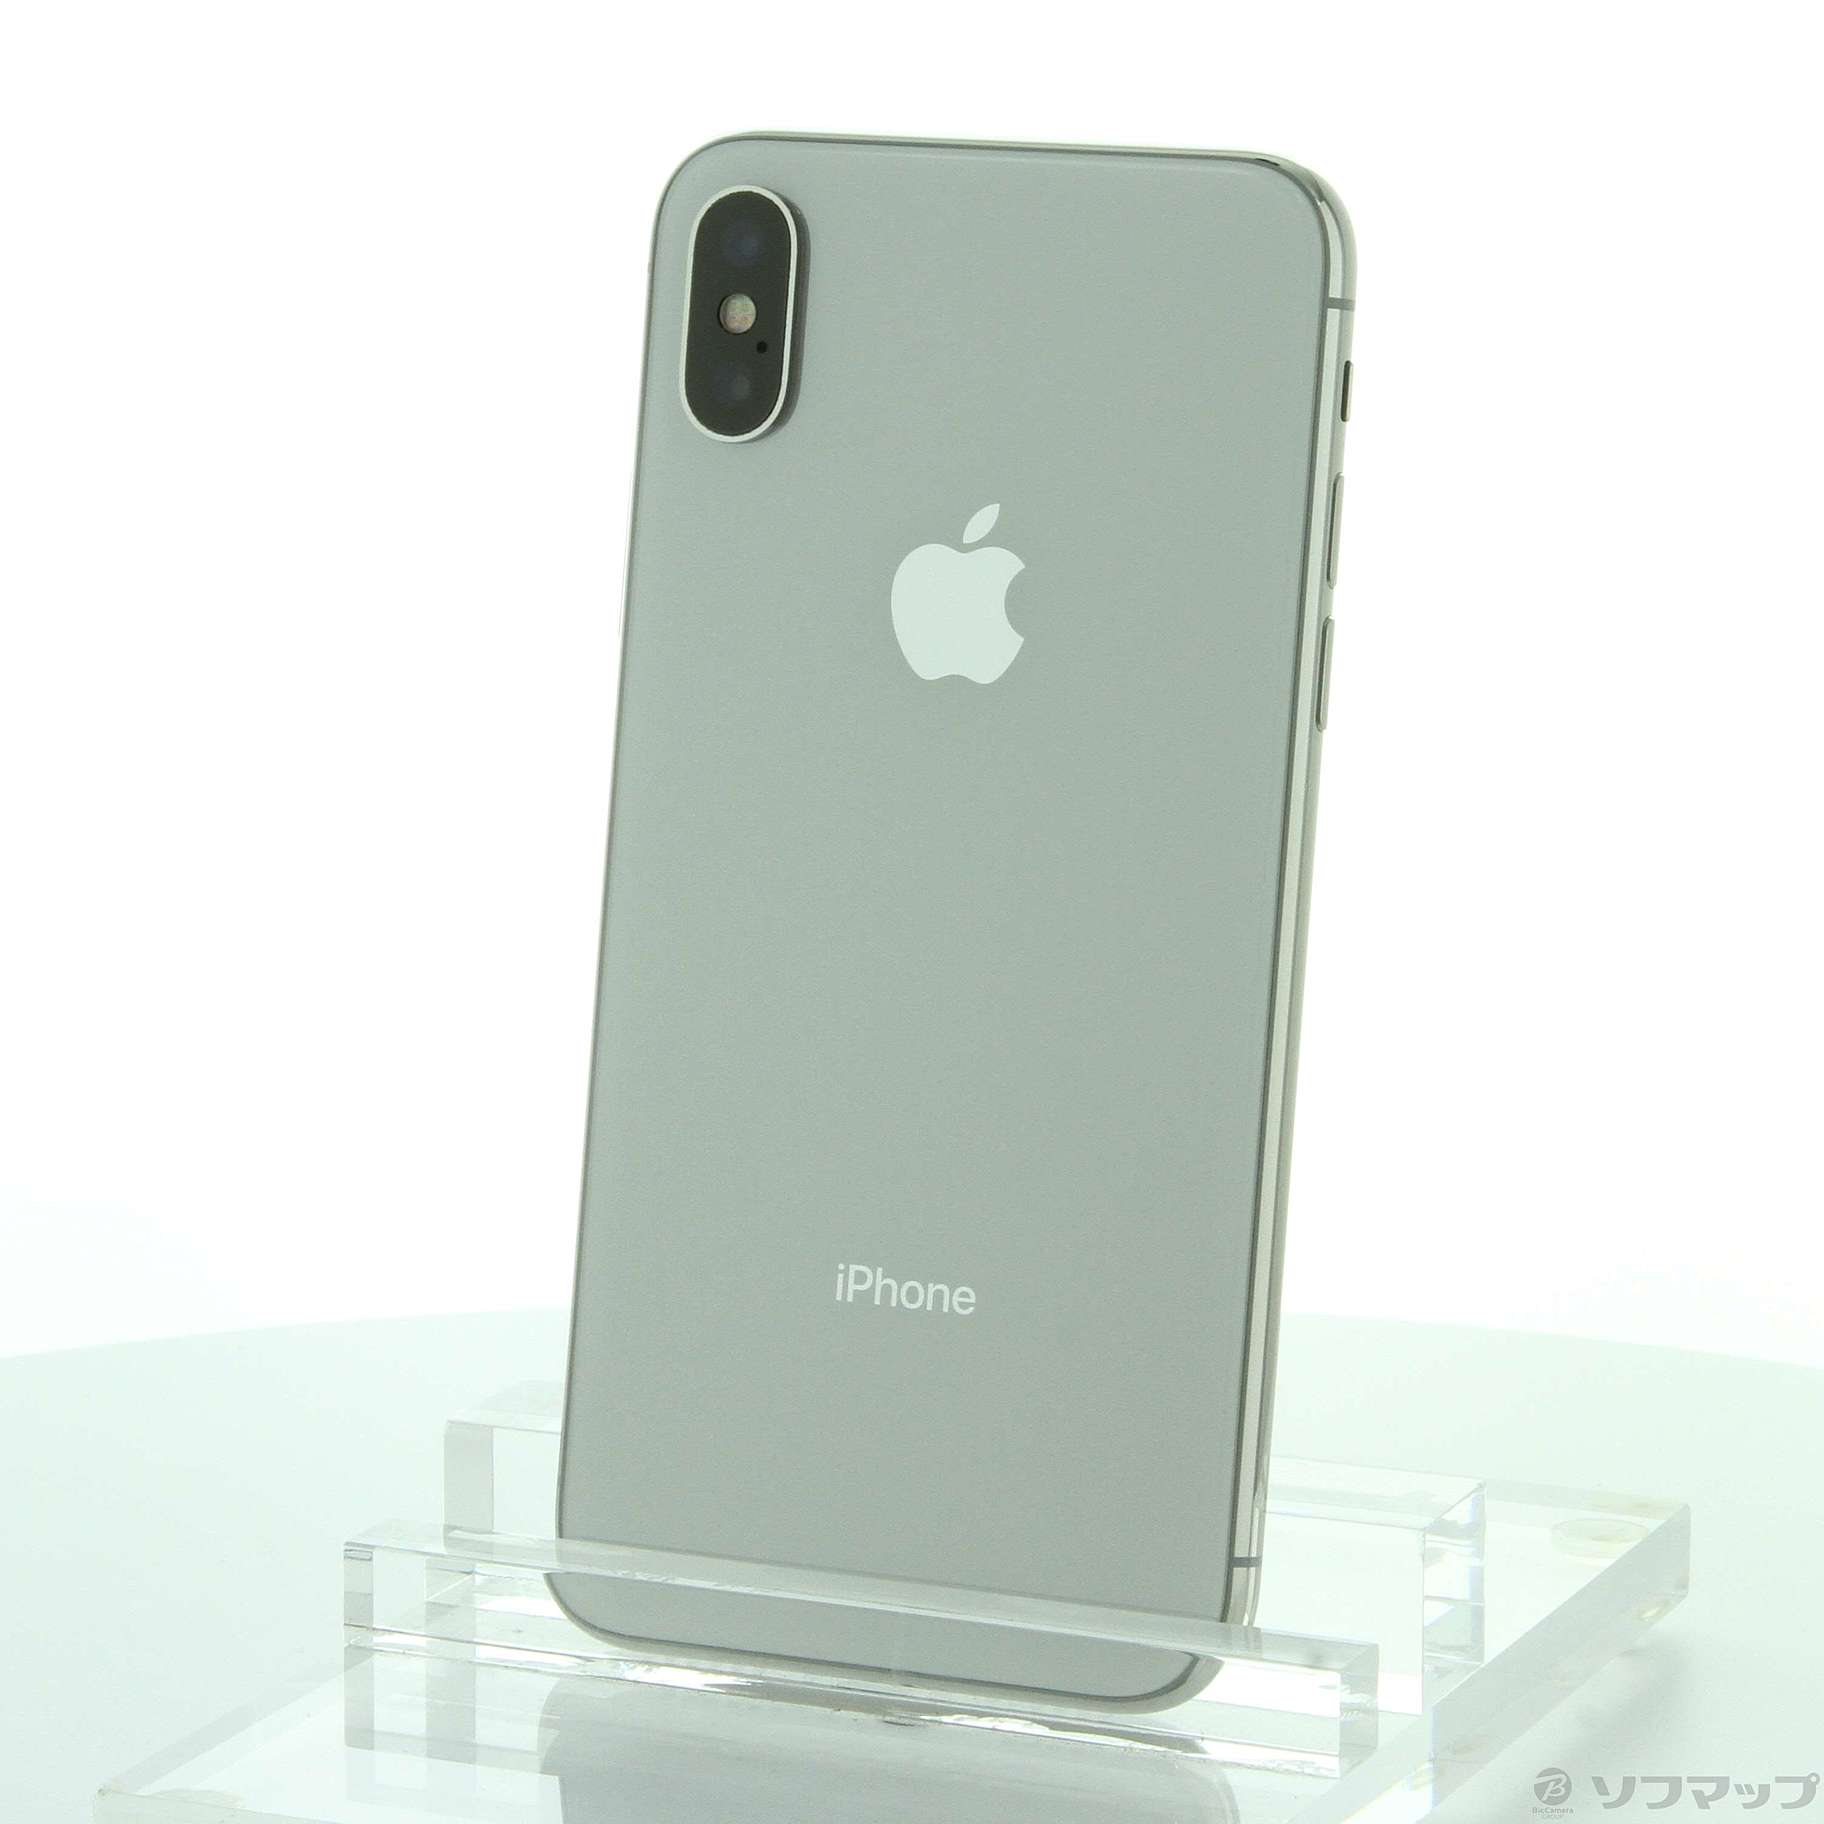 iPhone X 256GB SIMフリー 中古(白ロム)価格比較 - 価格.com